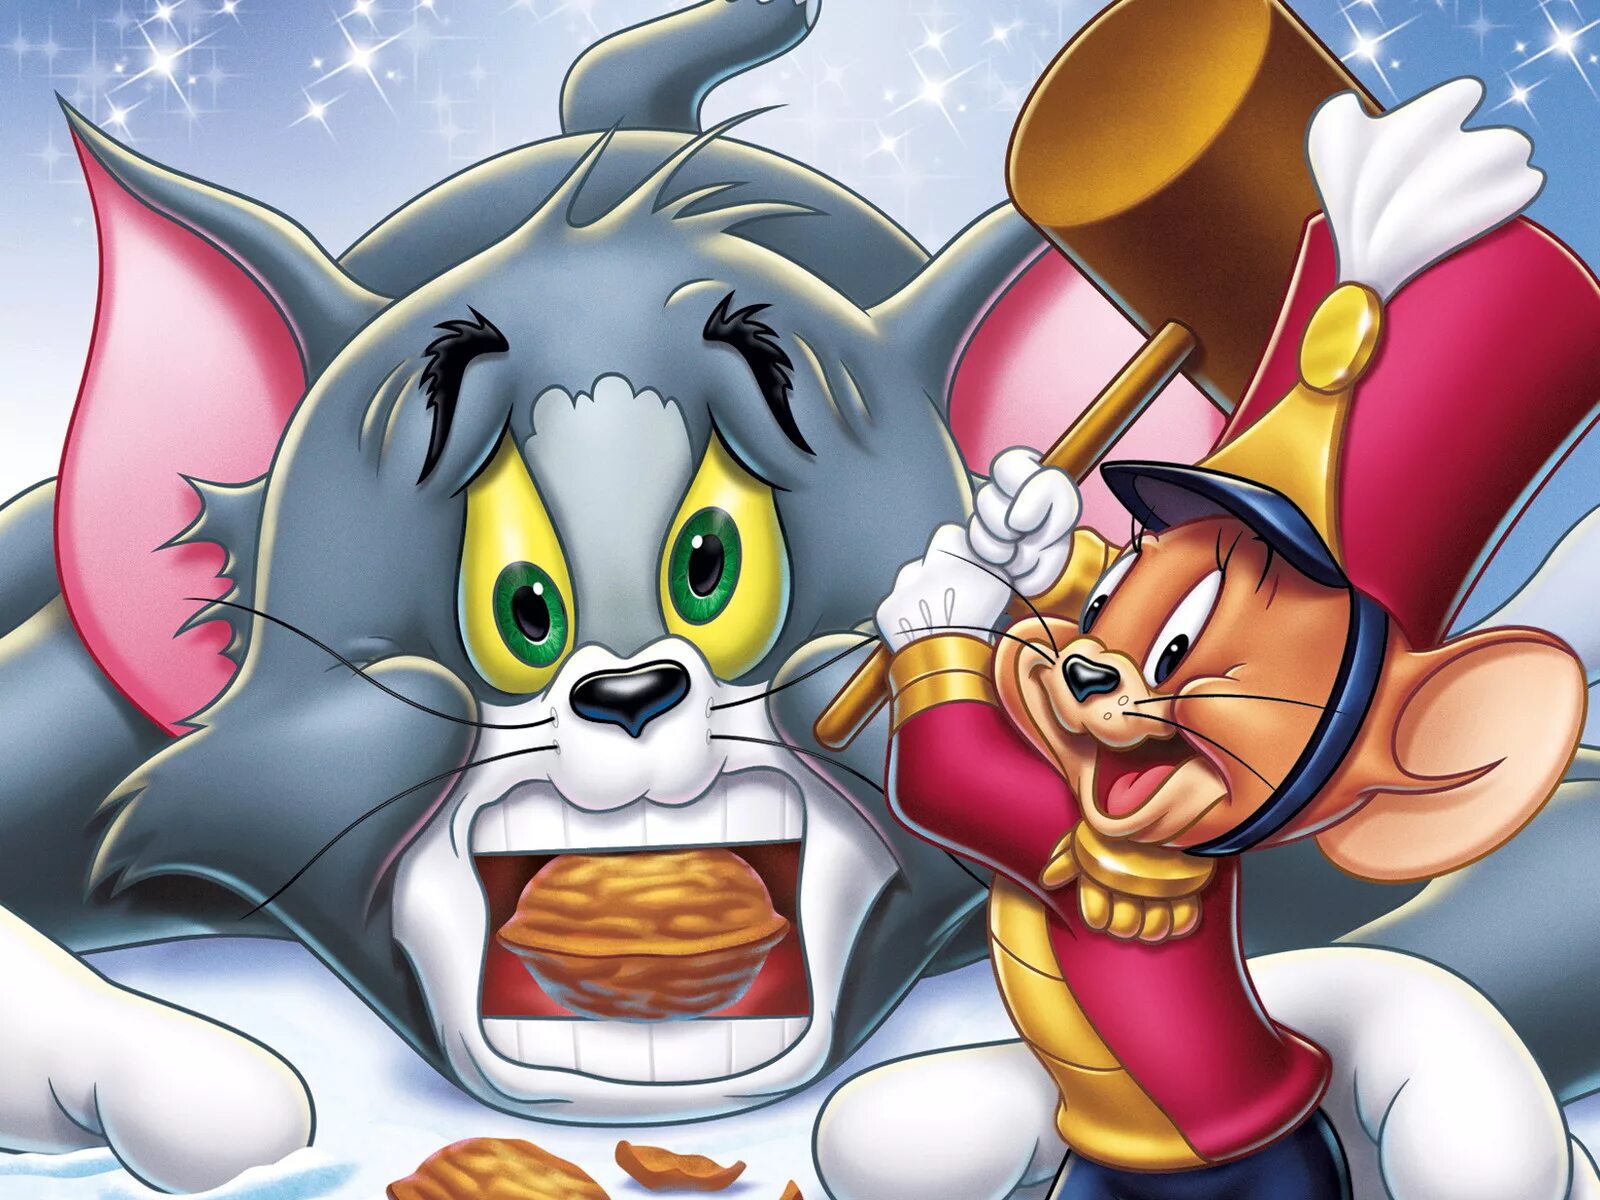 Jerry том и джерри. Tom and Jerry. Том и Джерри Tom and Jerry. Tom and Jerry: a Nutcracker Tale. Tom and Jerry cartoon.